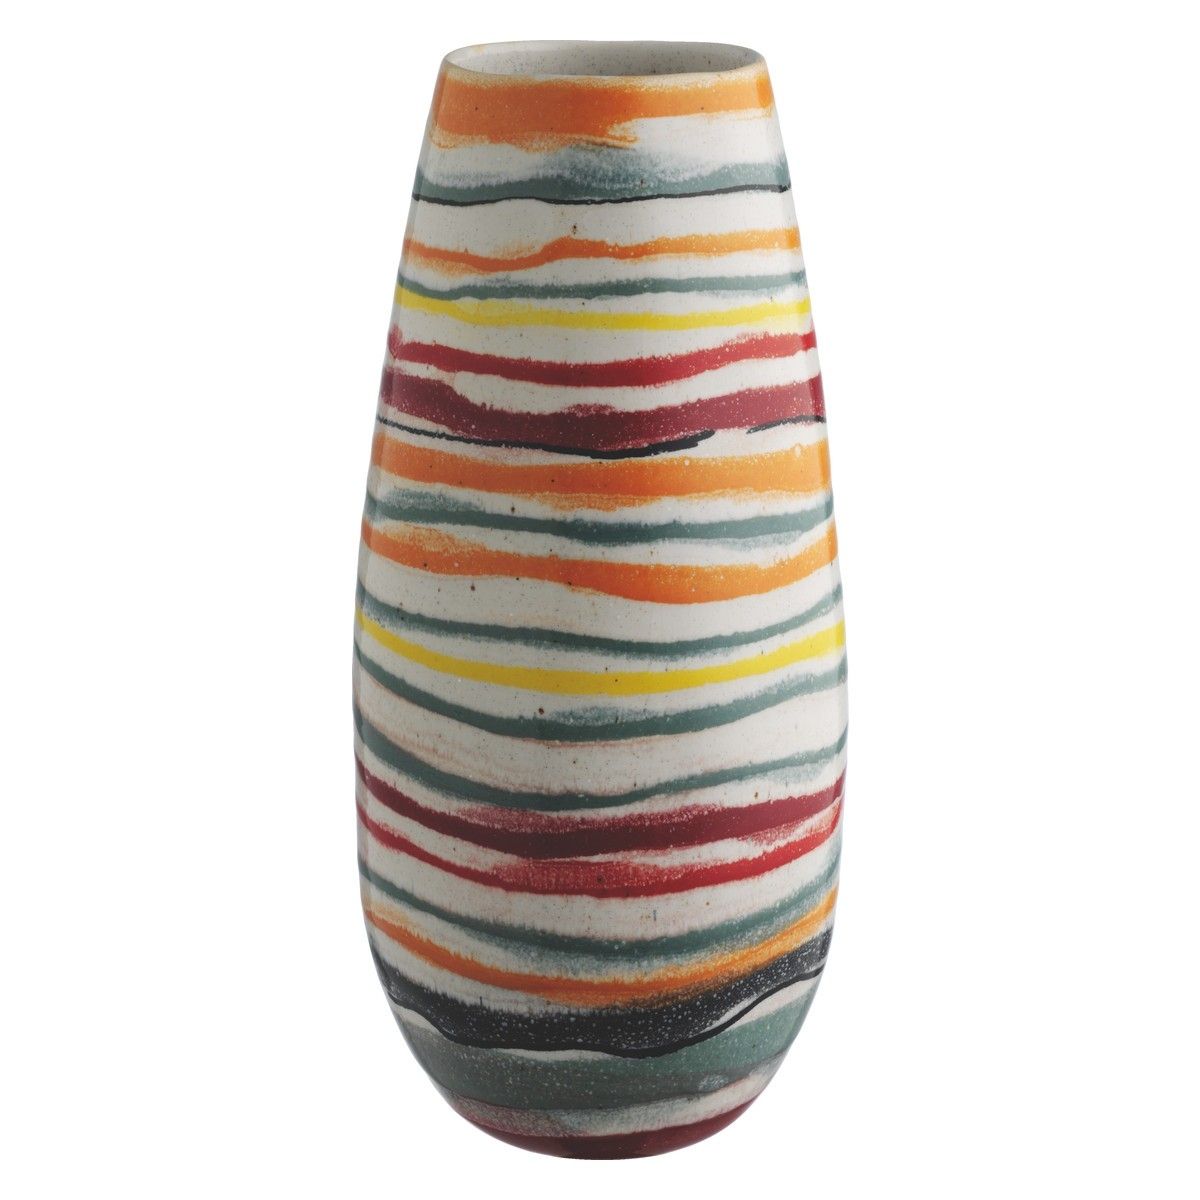 Wave Multi Coloured Striped Ceramic Vase Buy Now At Habitat Uk Regarding Multi Coloured Striped Curtains (Photo 11 of 15)